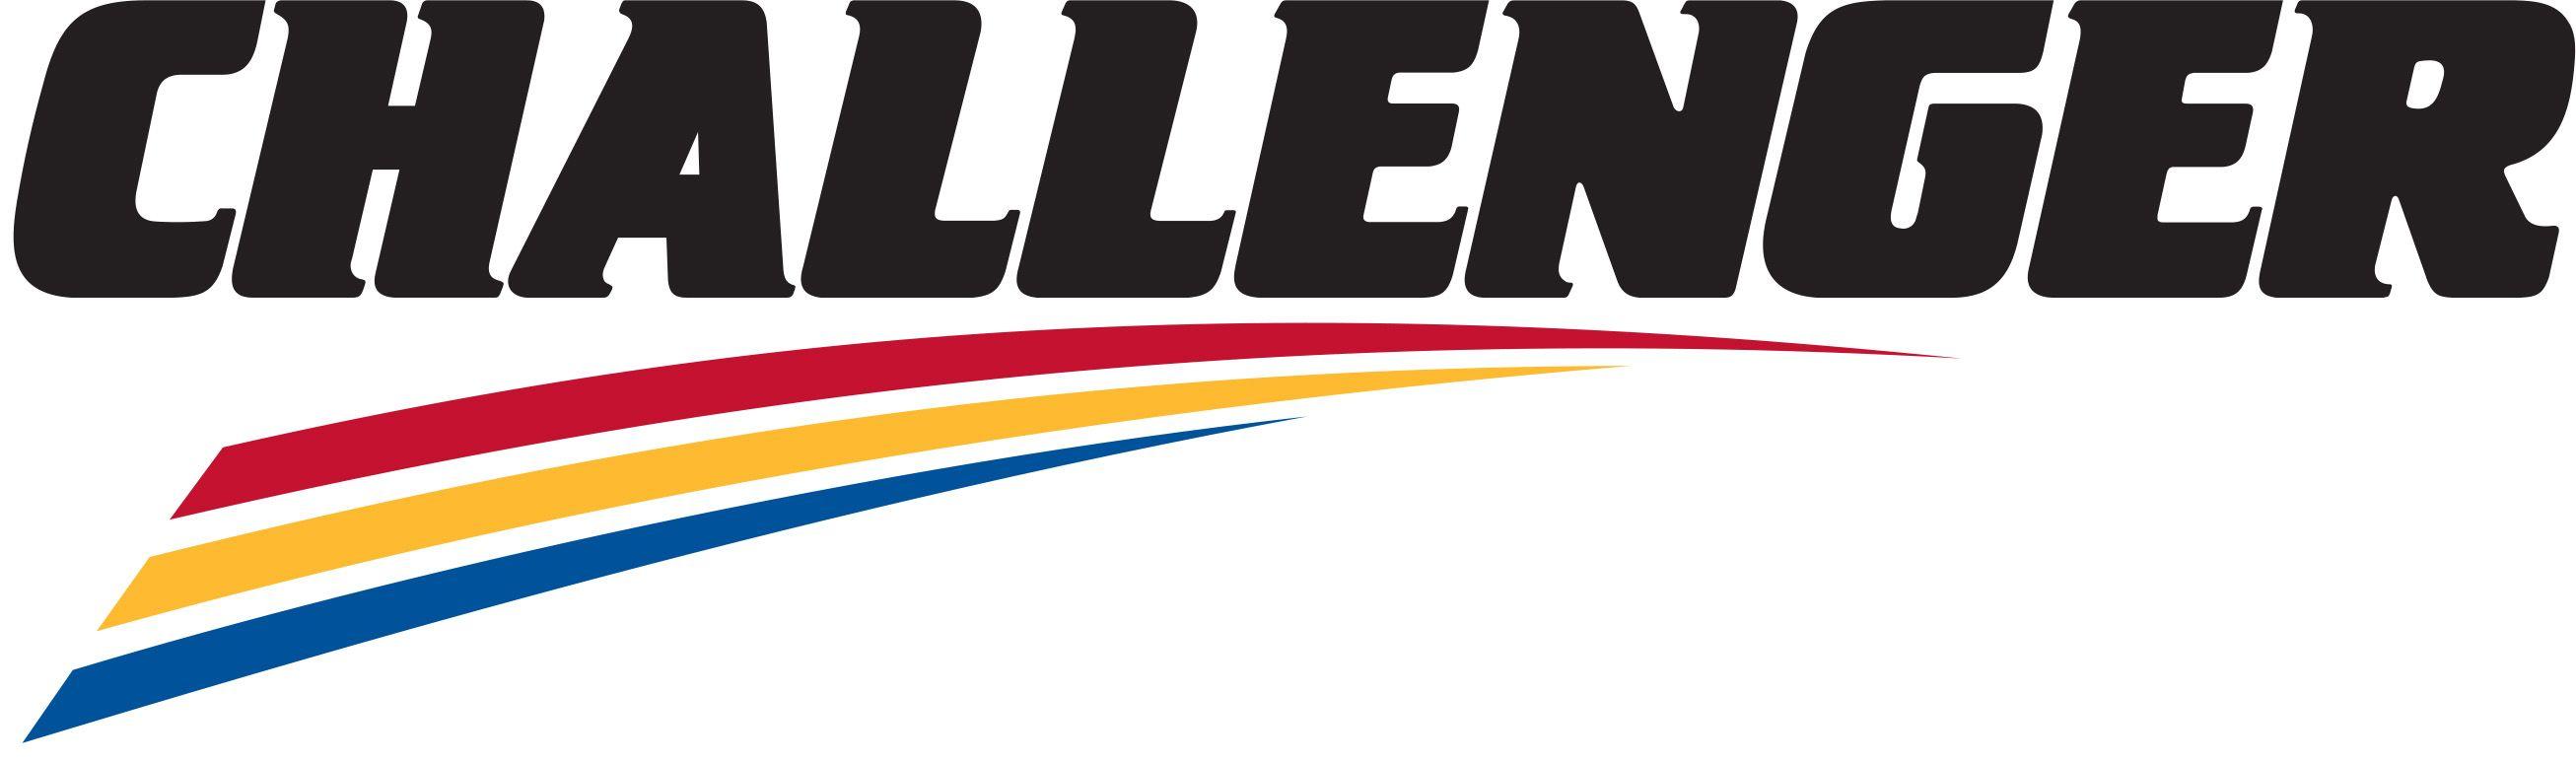 Challenger Logo - Challenger GRI 2016/ Augmentation Tarifaire 2016